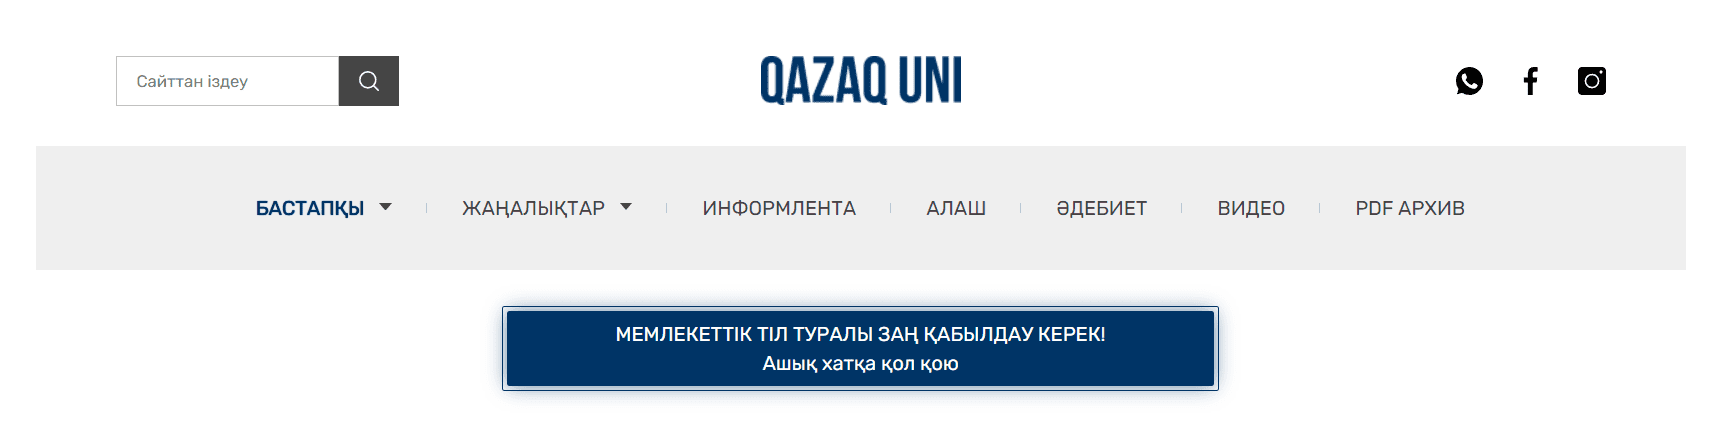 Qazaquni.kz - официальный сайт